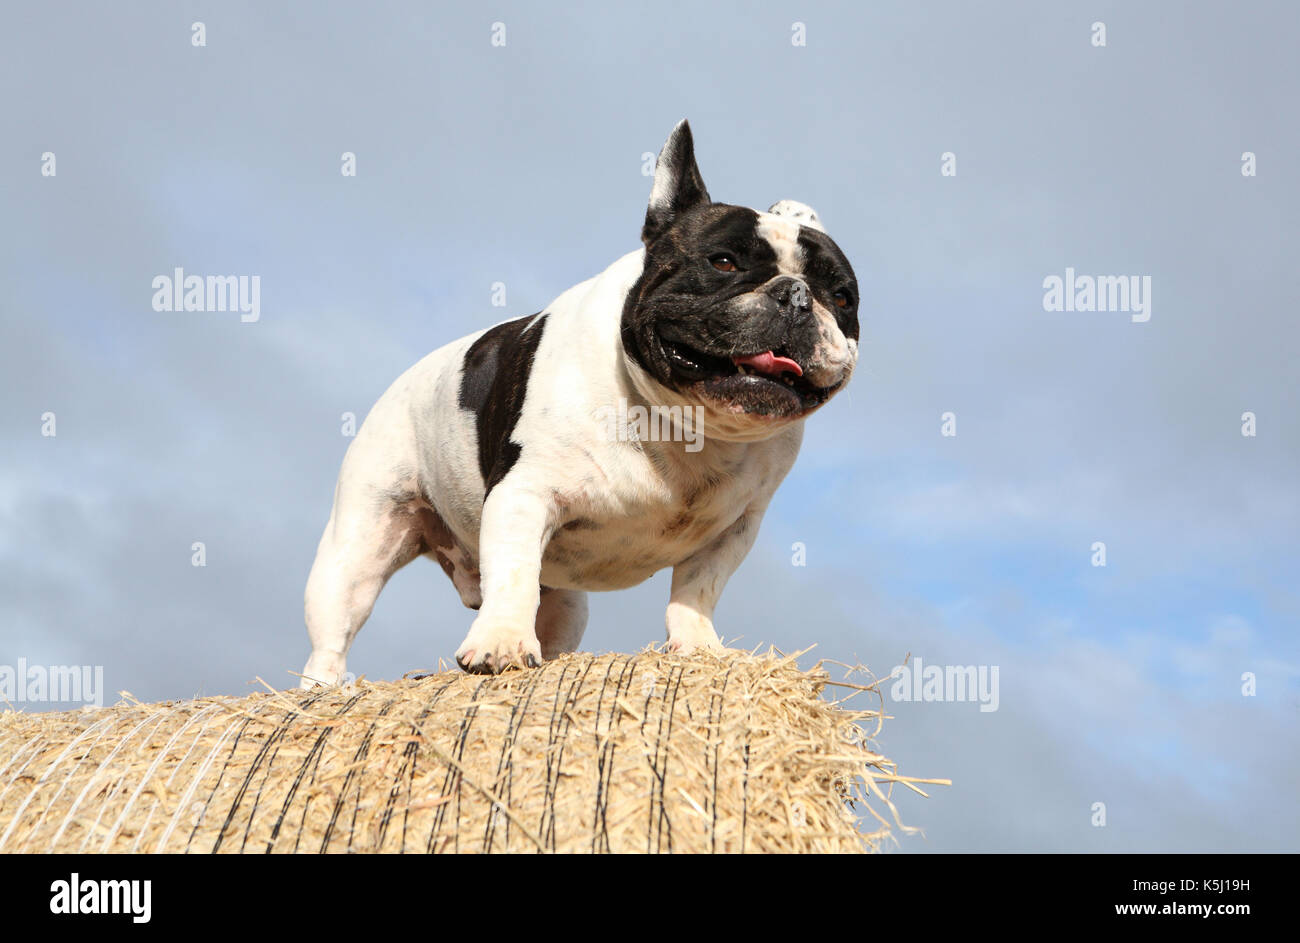 French bull dog Stock Photo